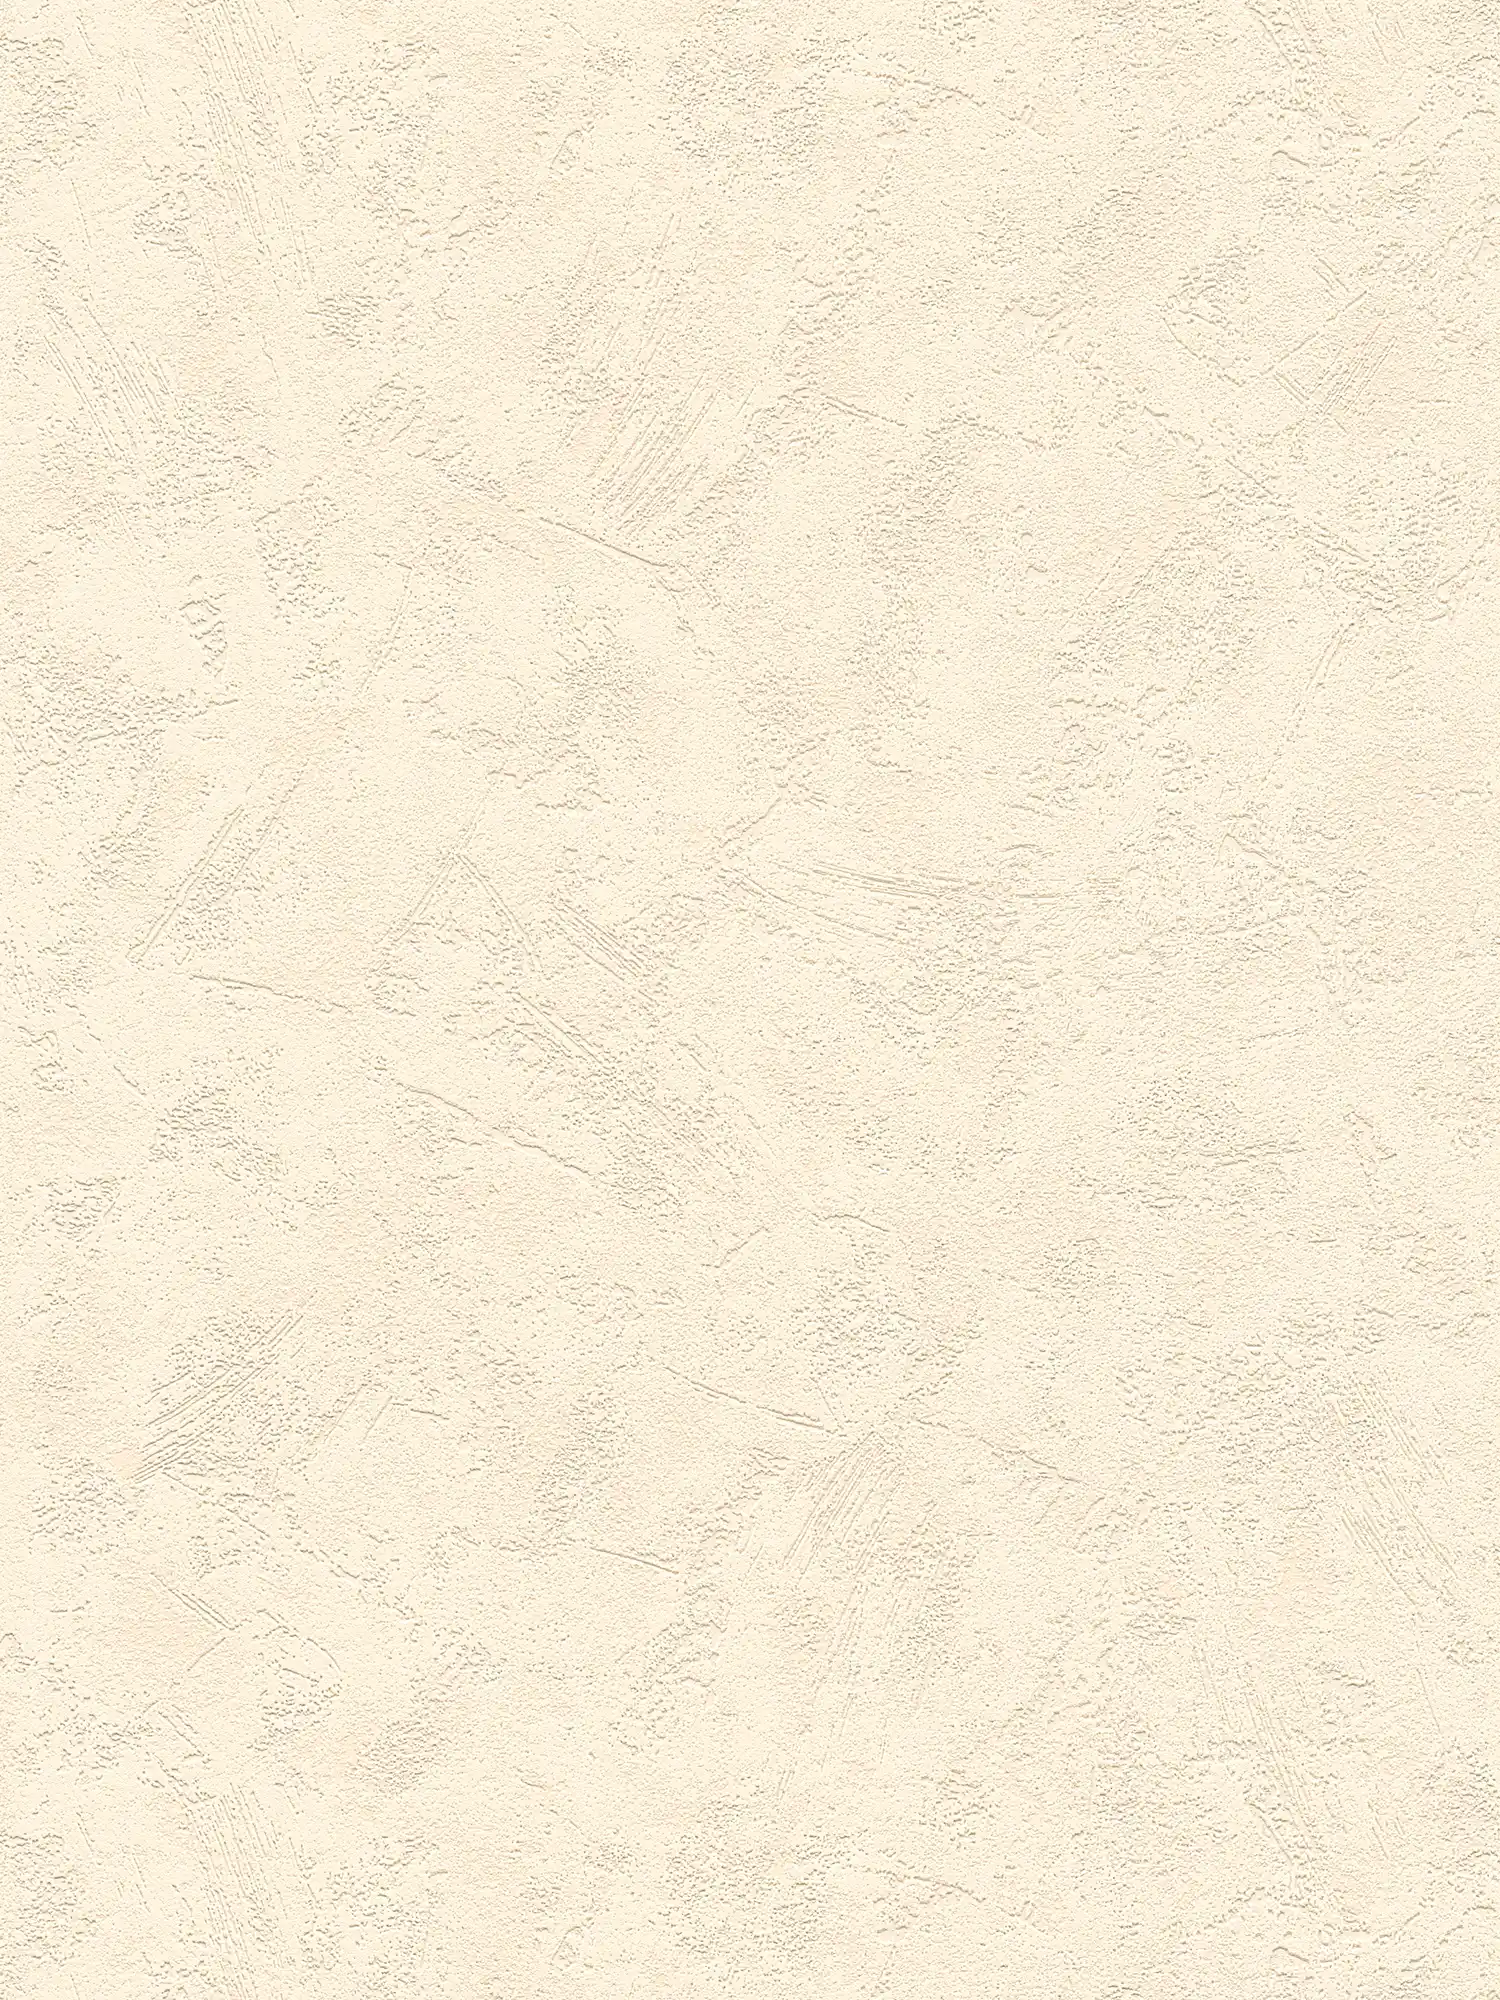 Plaster look wallpaper with wipe plaster texture pattern - cream
